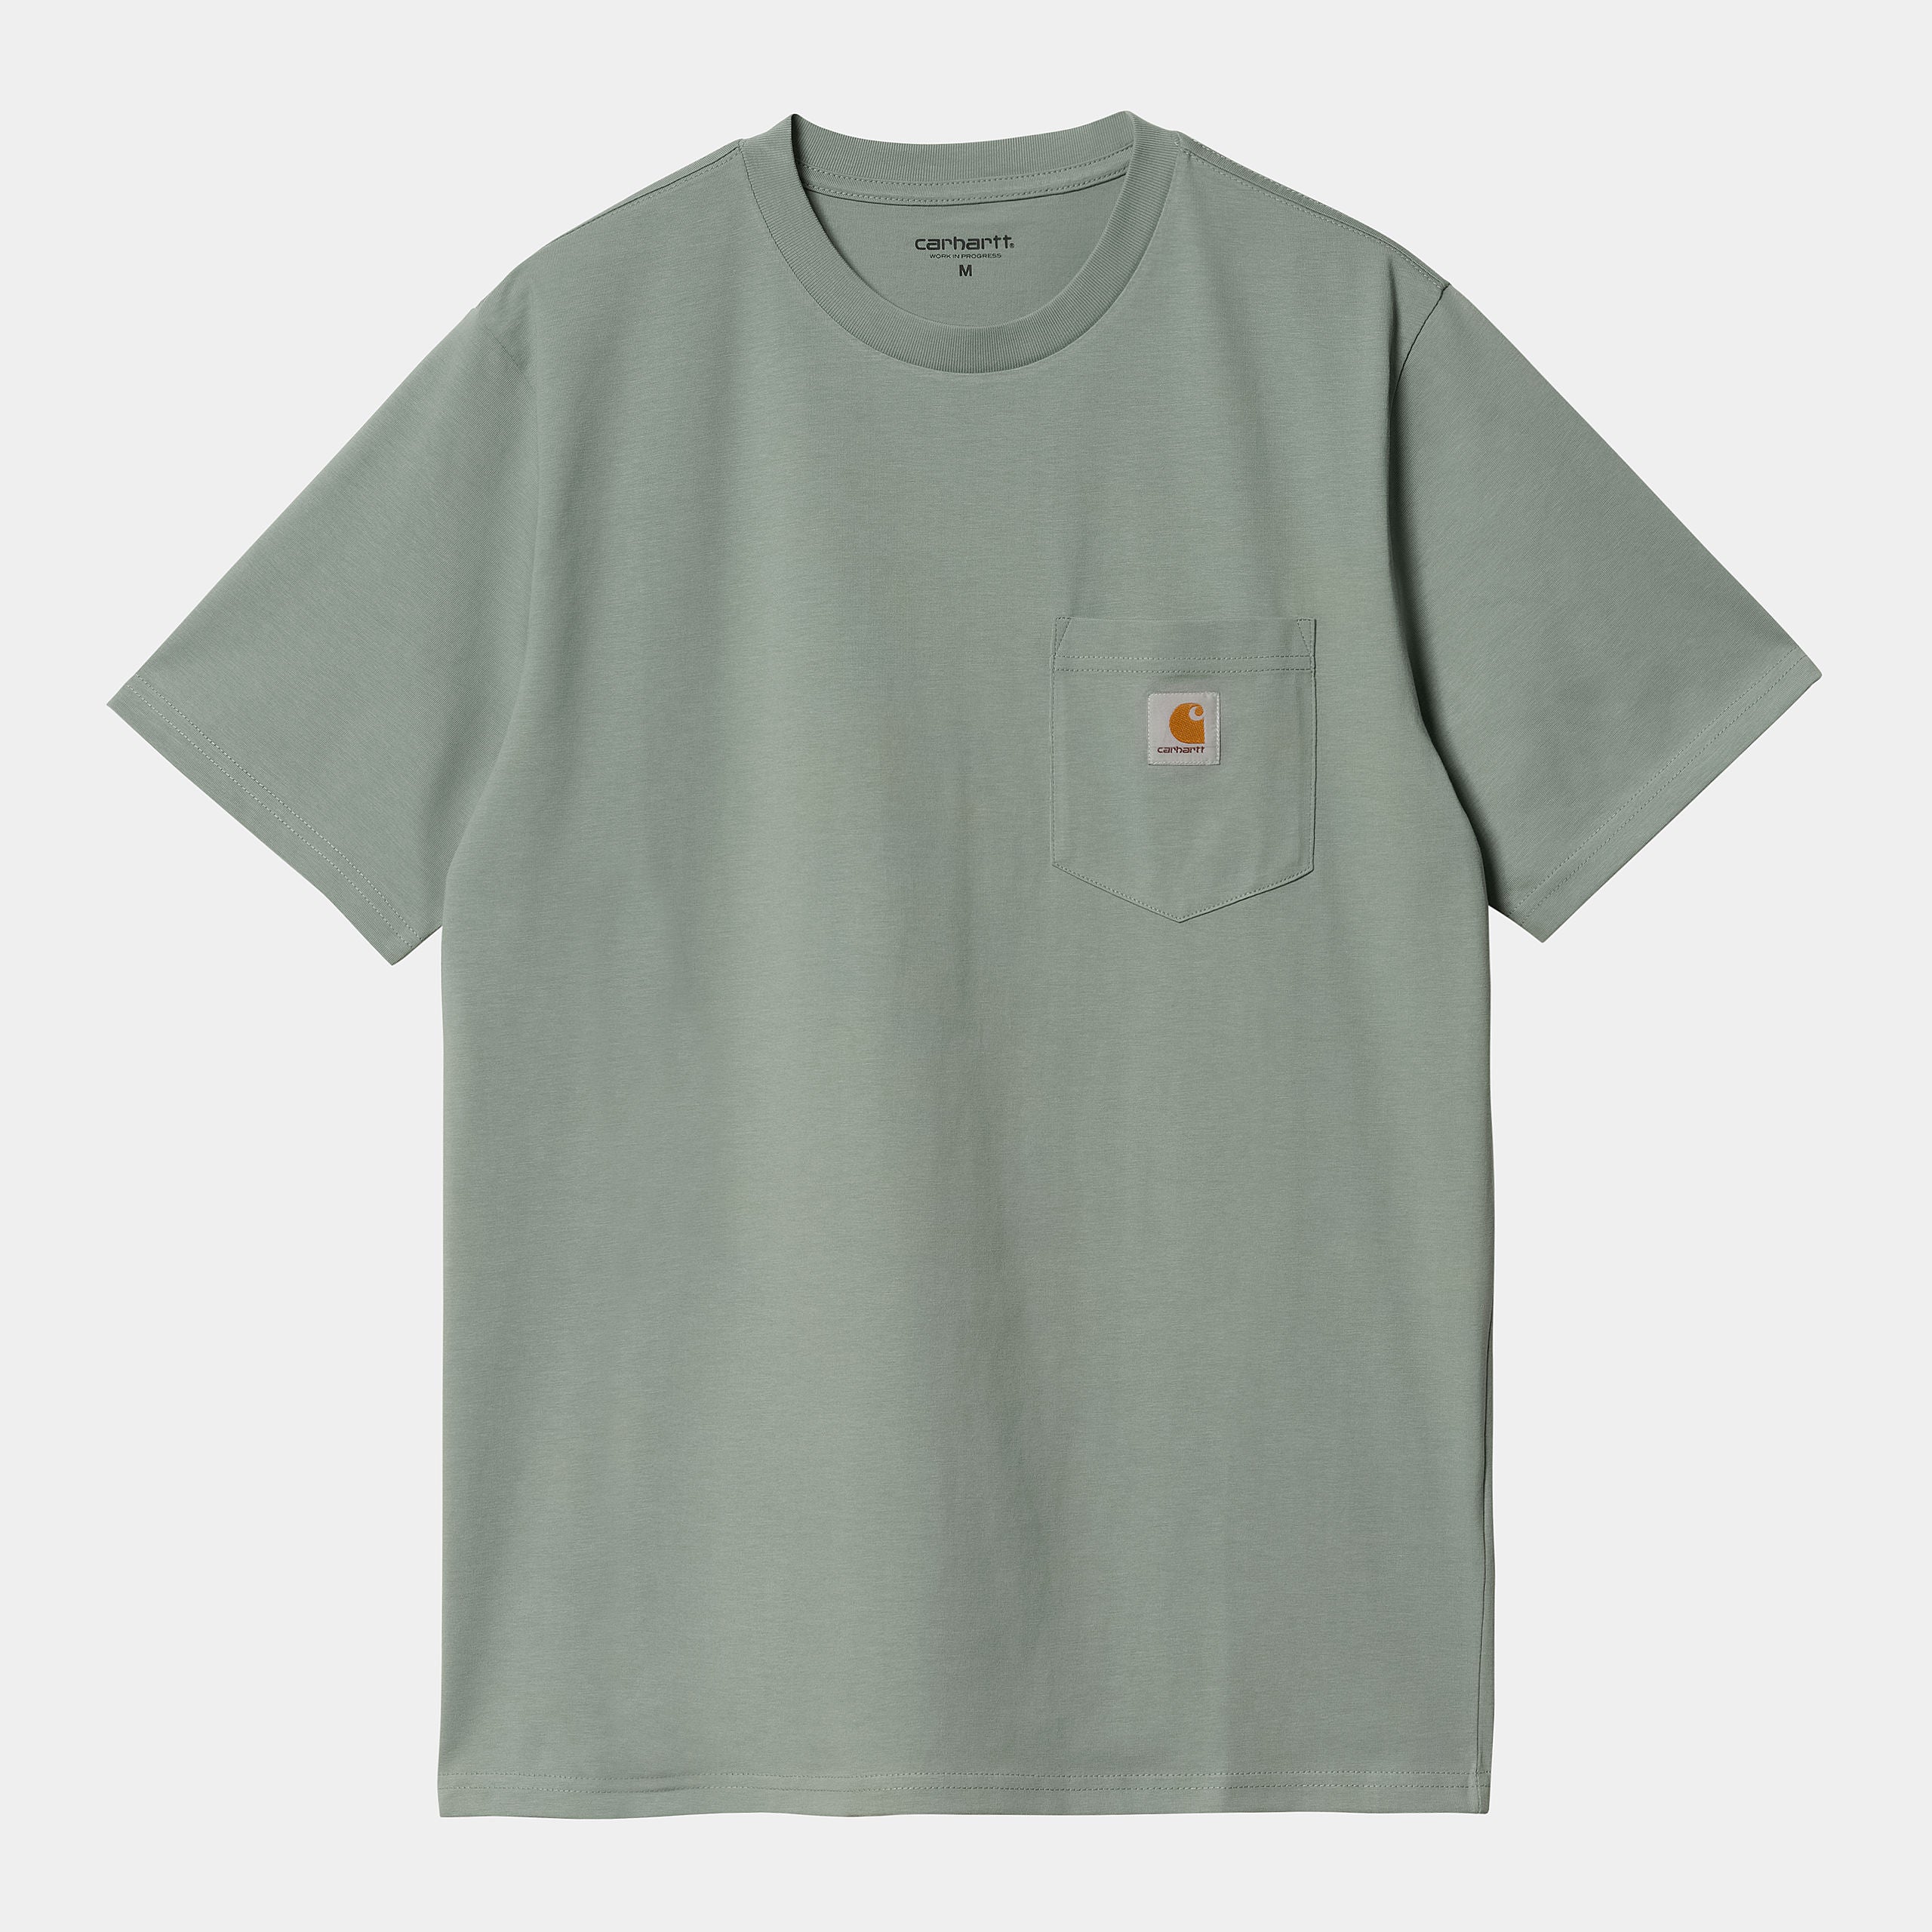 Men'sShirt Sleeve Pocket T-Shirt-Glassy Teal-Front View